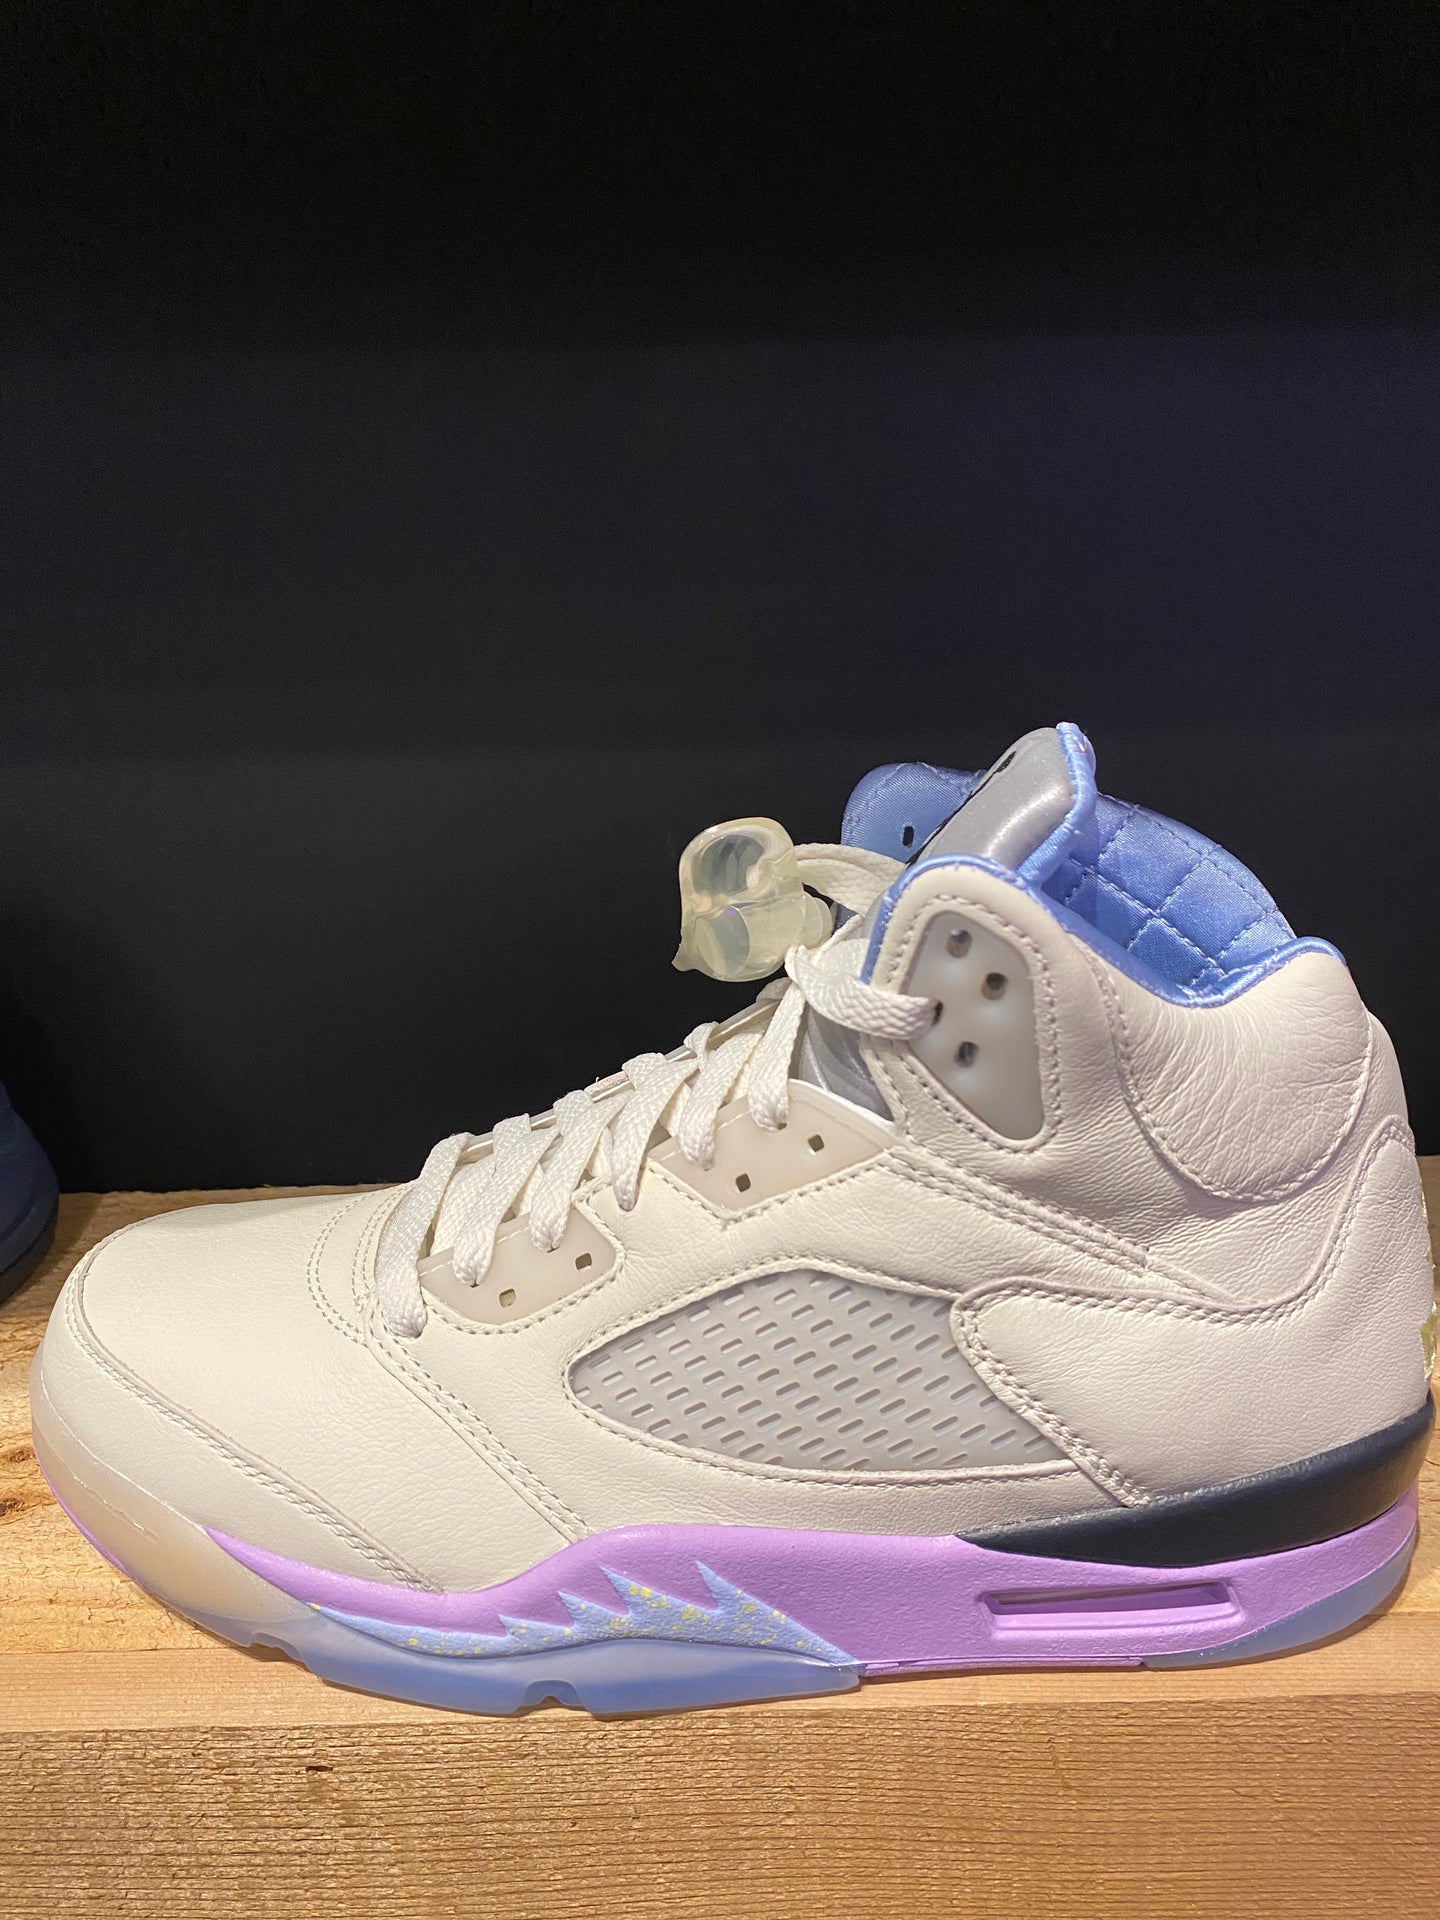 Today's Sneaker Menu: DJ Khaled x Air Jordan 5 We The Best